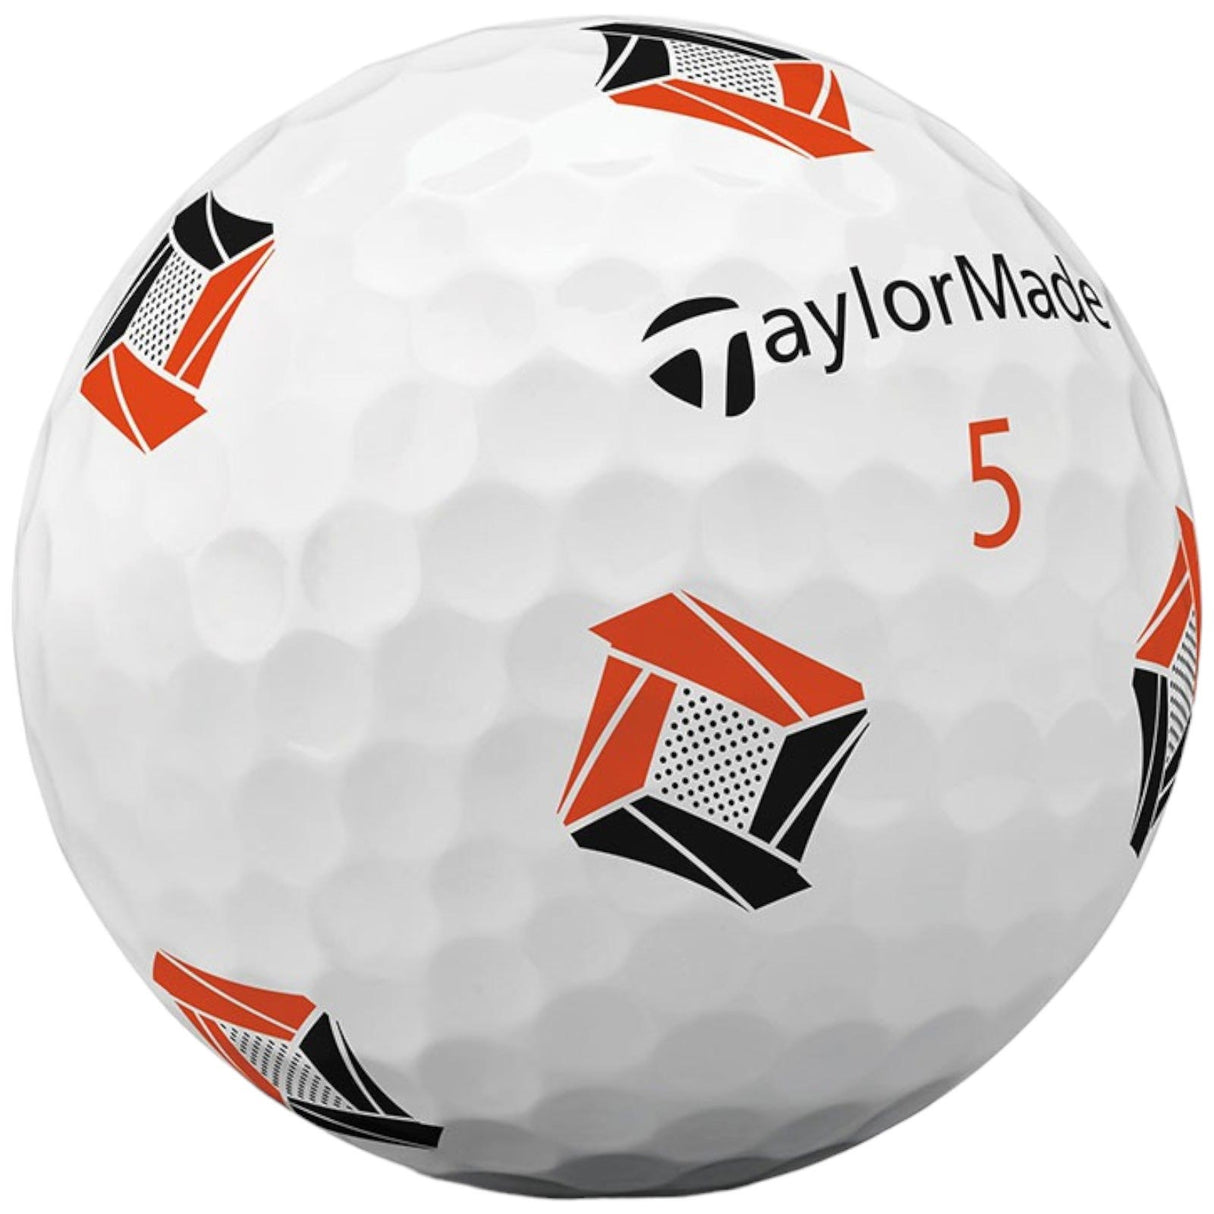 Taylormade TP5X Pix 3.0 23 Golf Ball Wht